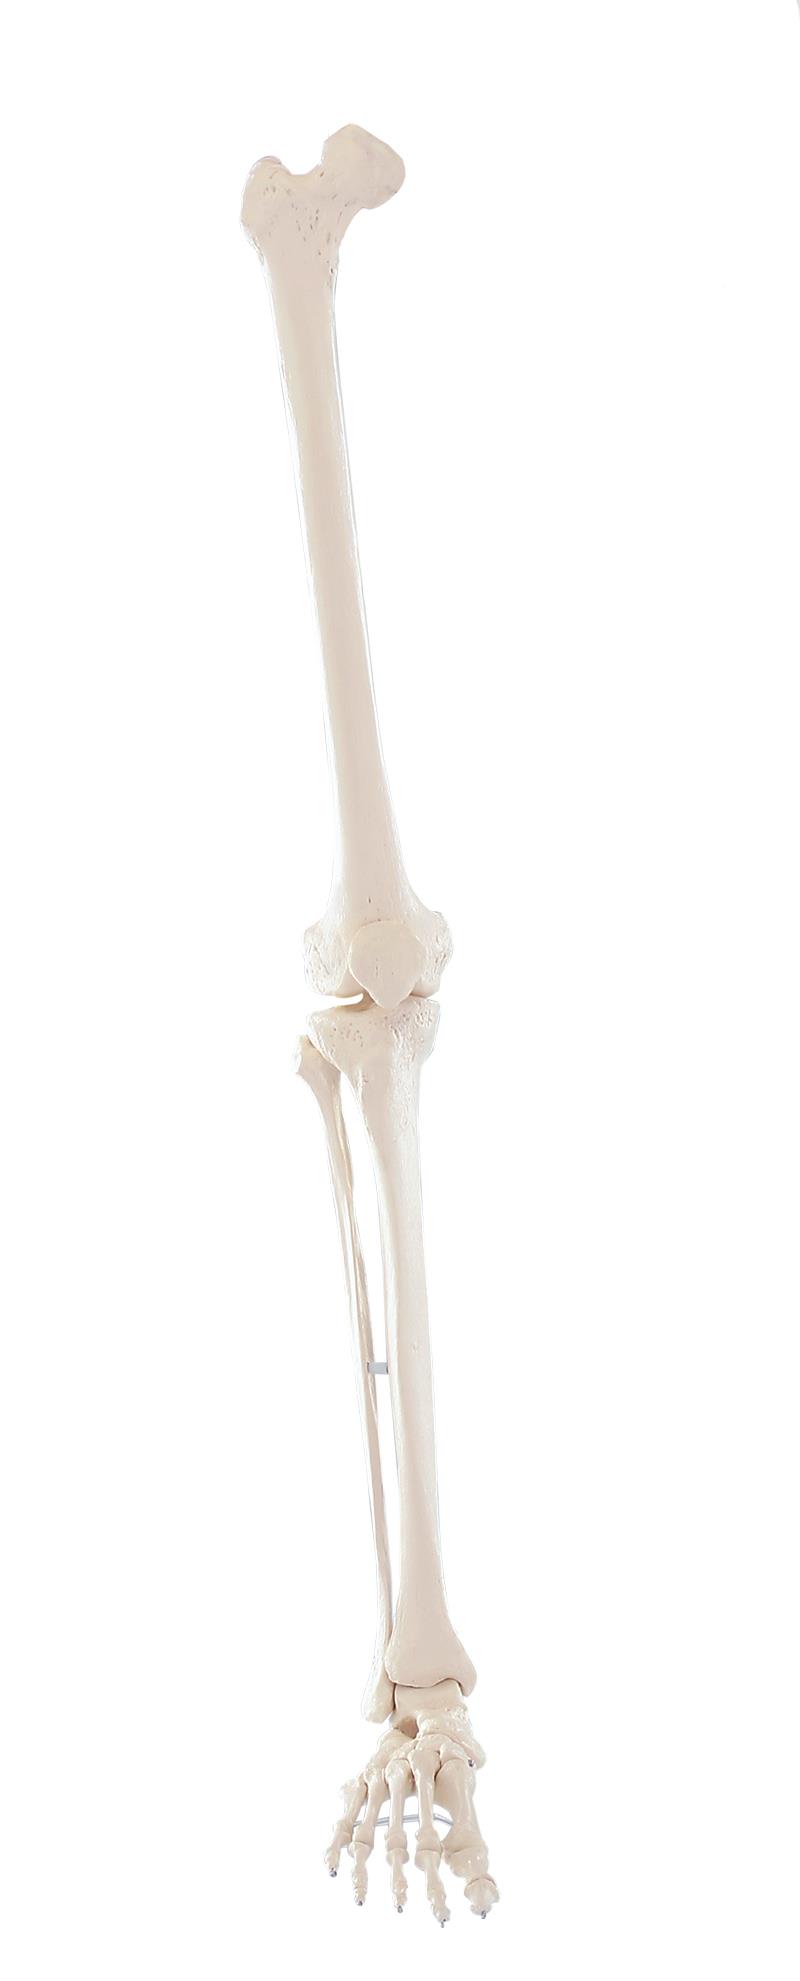 Squelette de la jambe